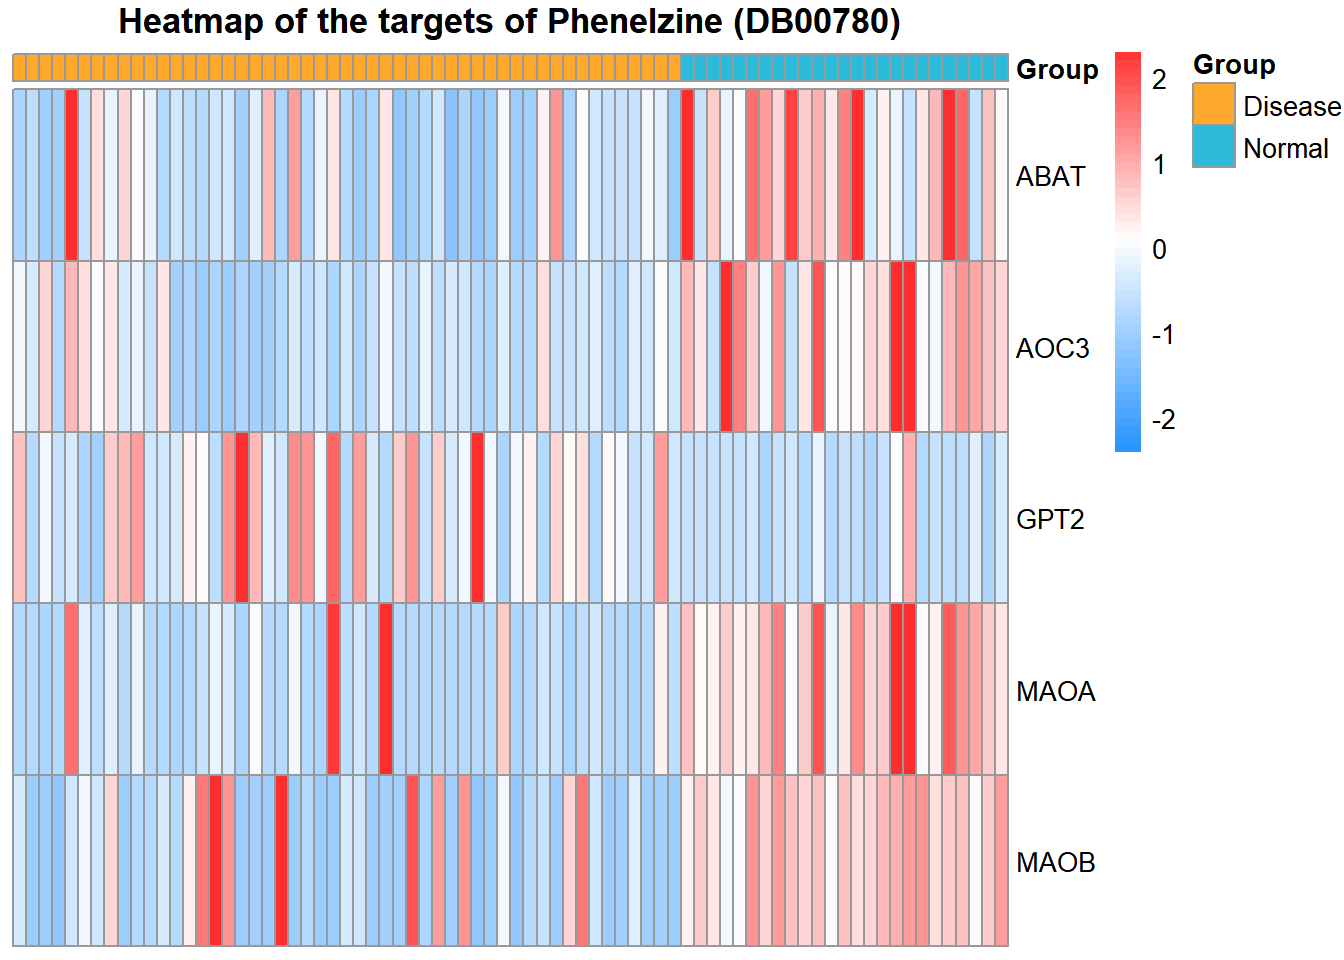 Heatmaps of targets for Phenelzine